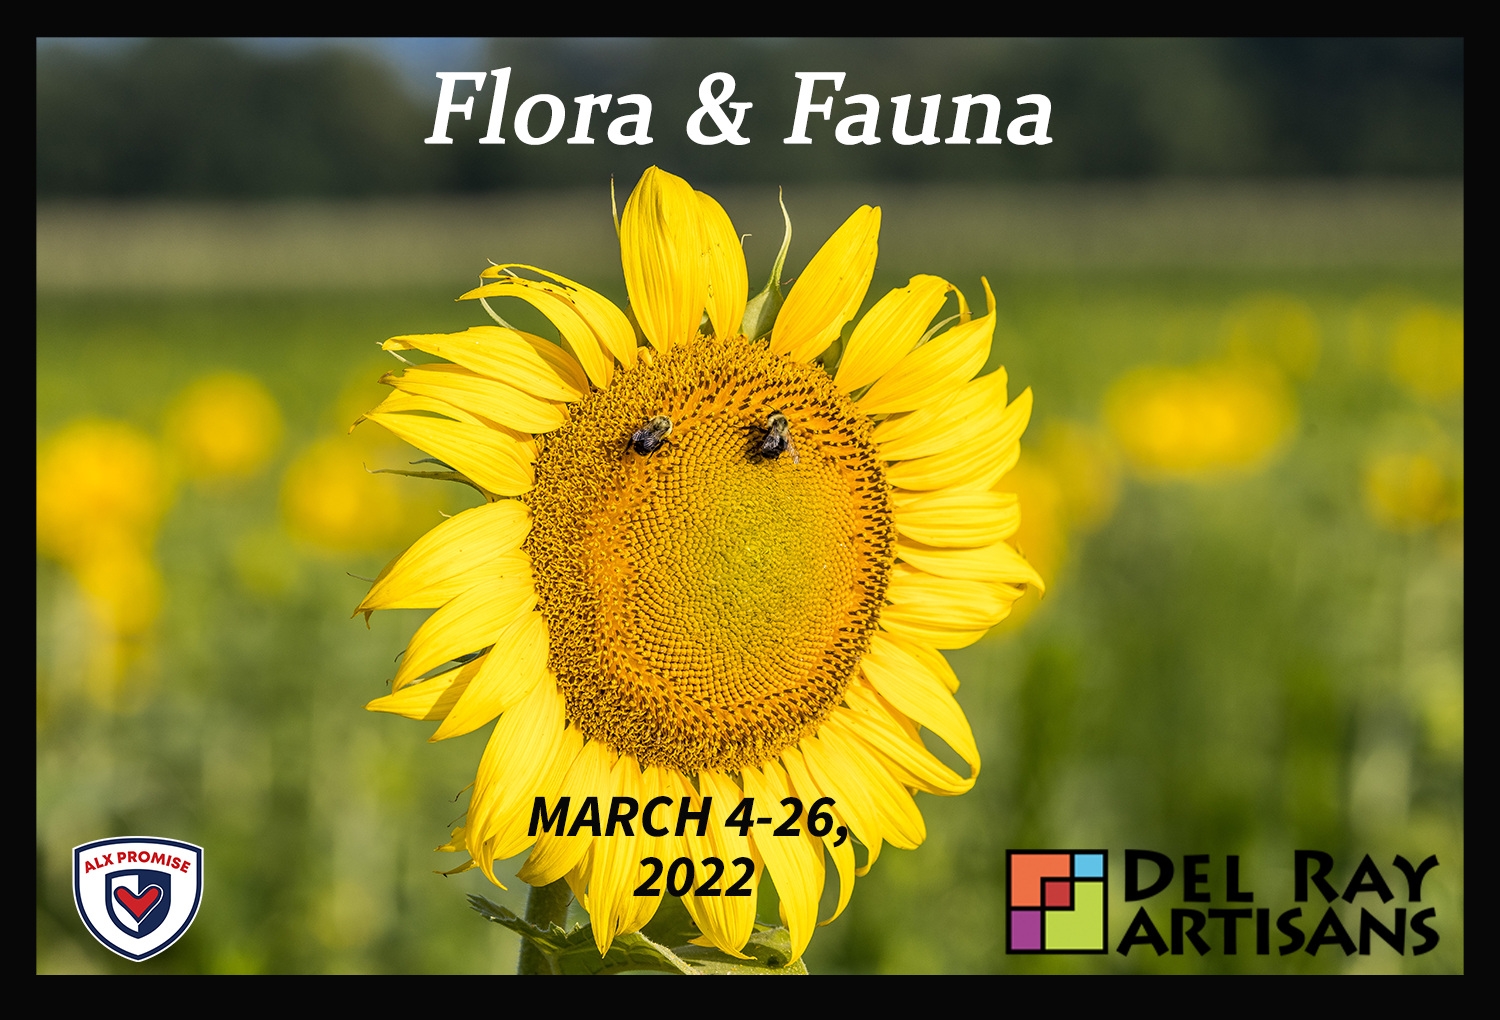 Flora & Fauna Art Exhibit at Del Ray Artisans